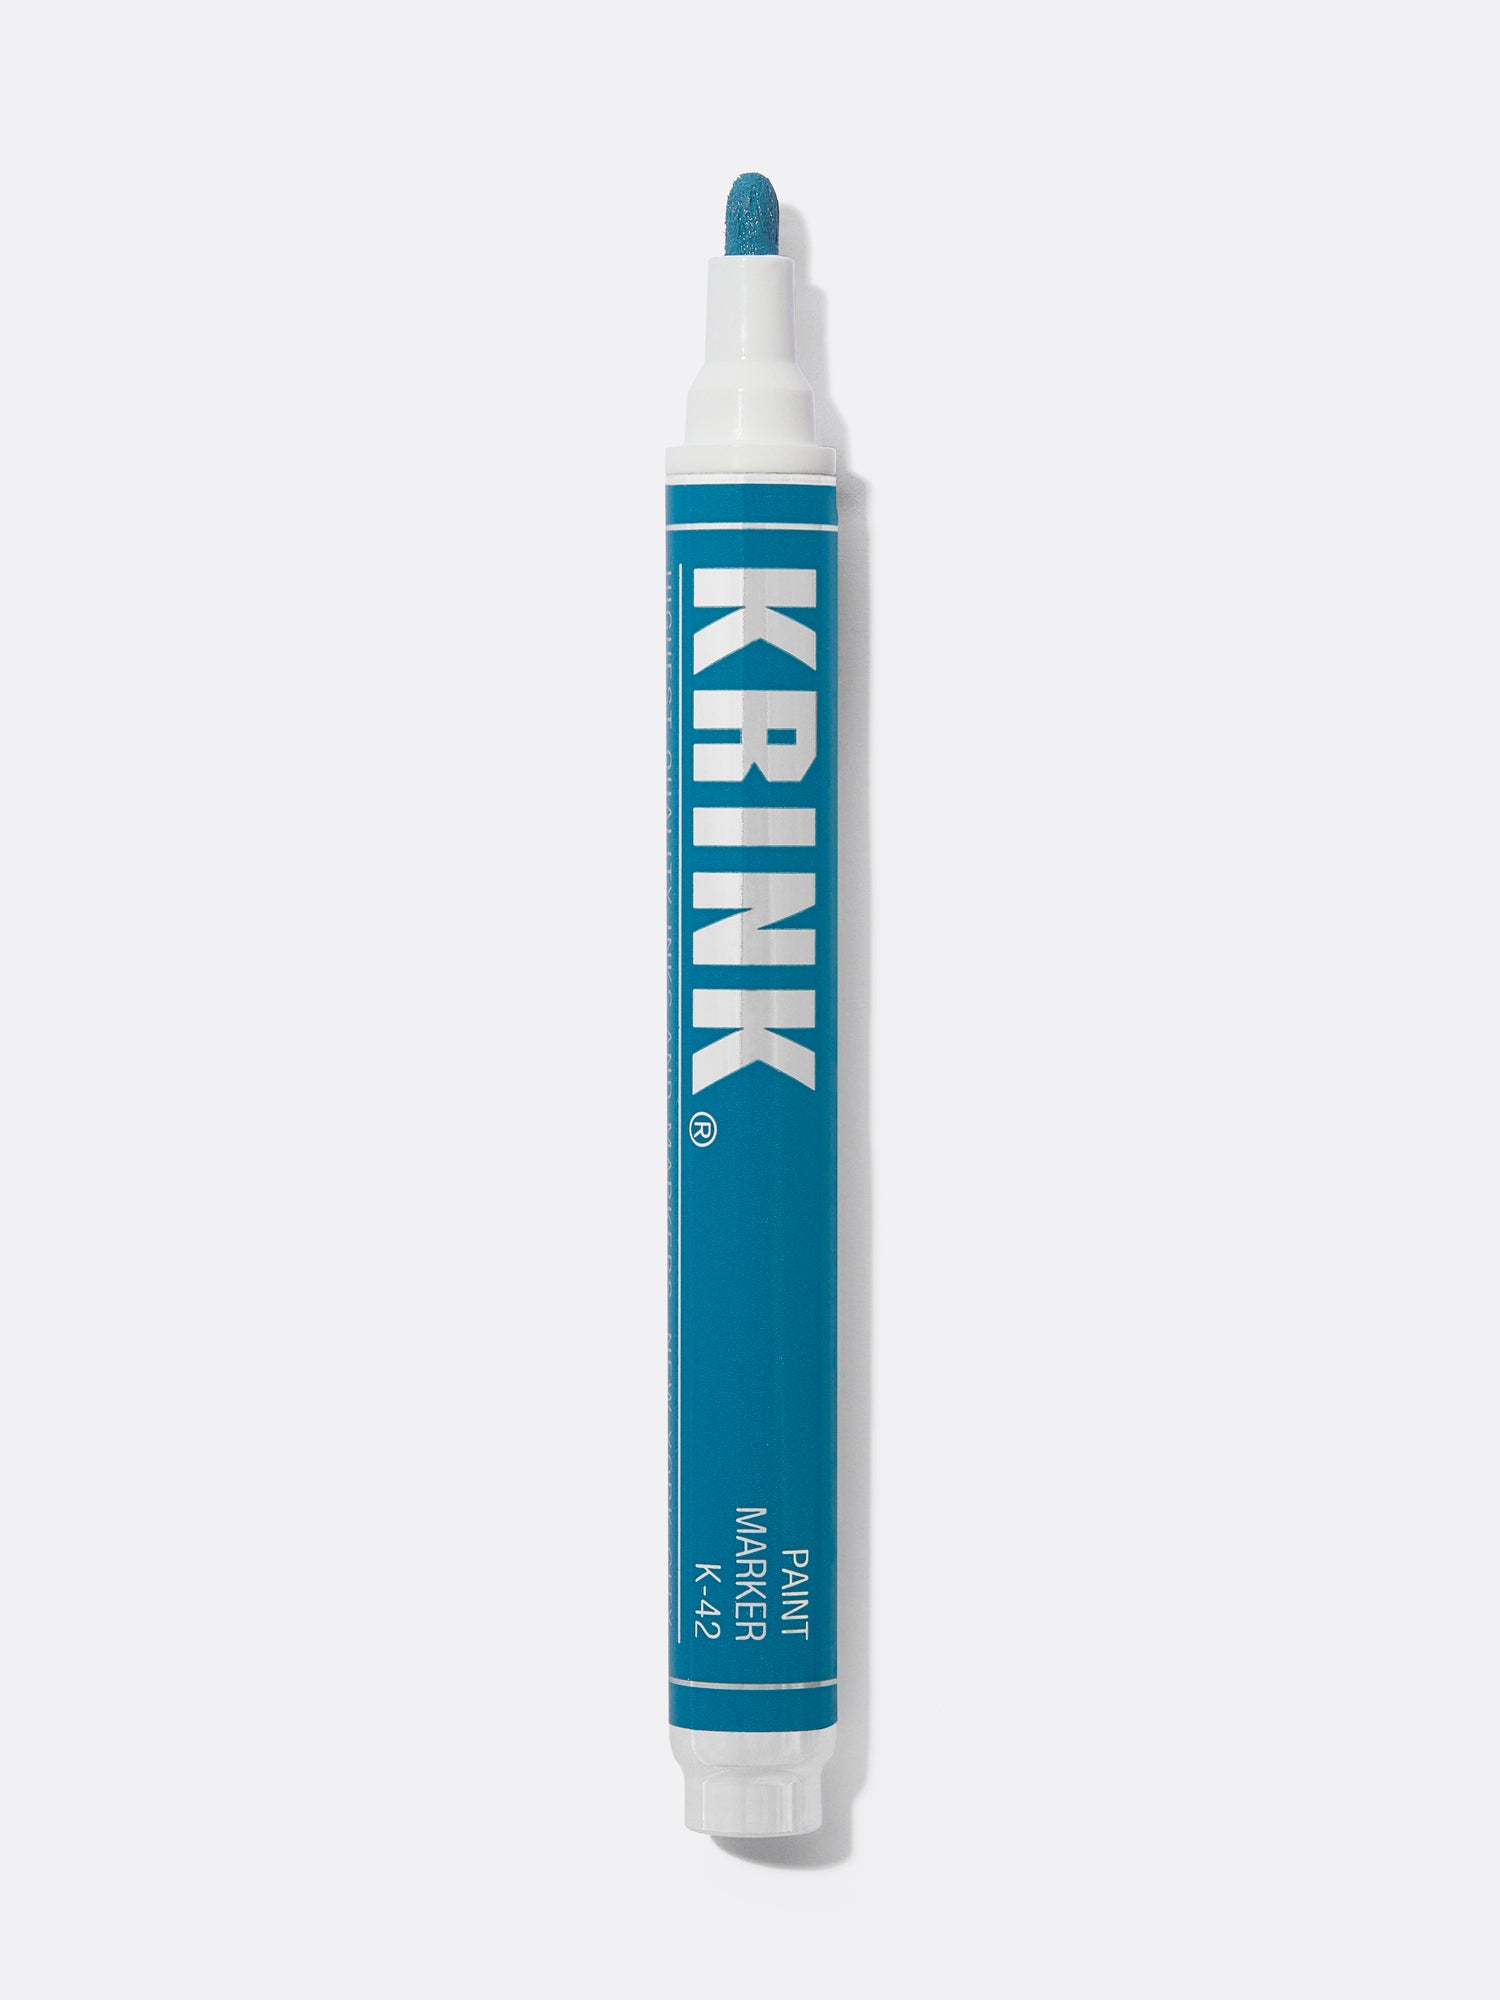 Krink K-42 Paint Marker Set, Box Set of 12 - Sam Flax Atlanta